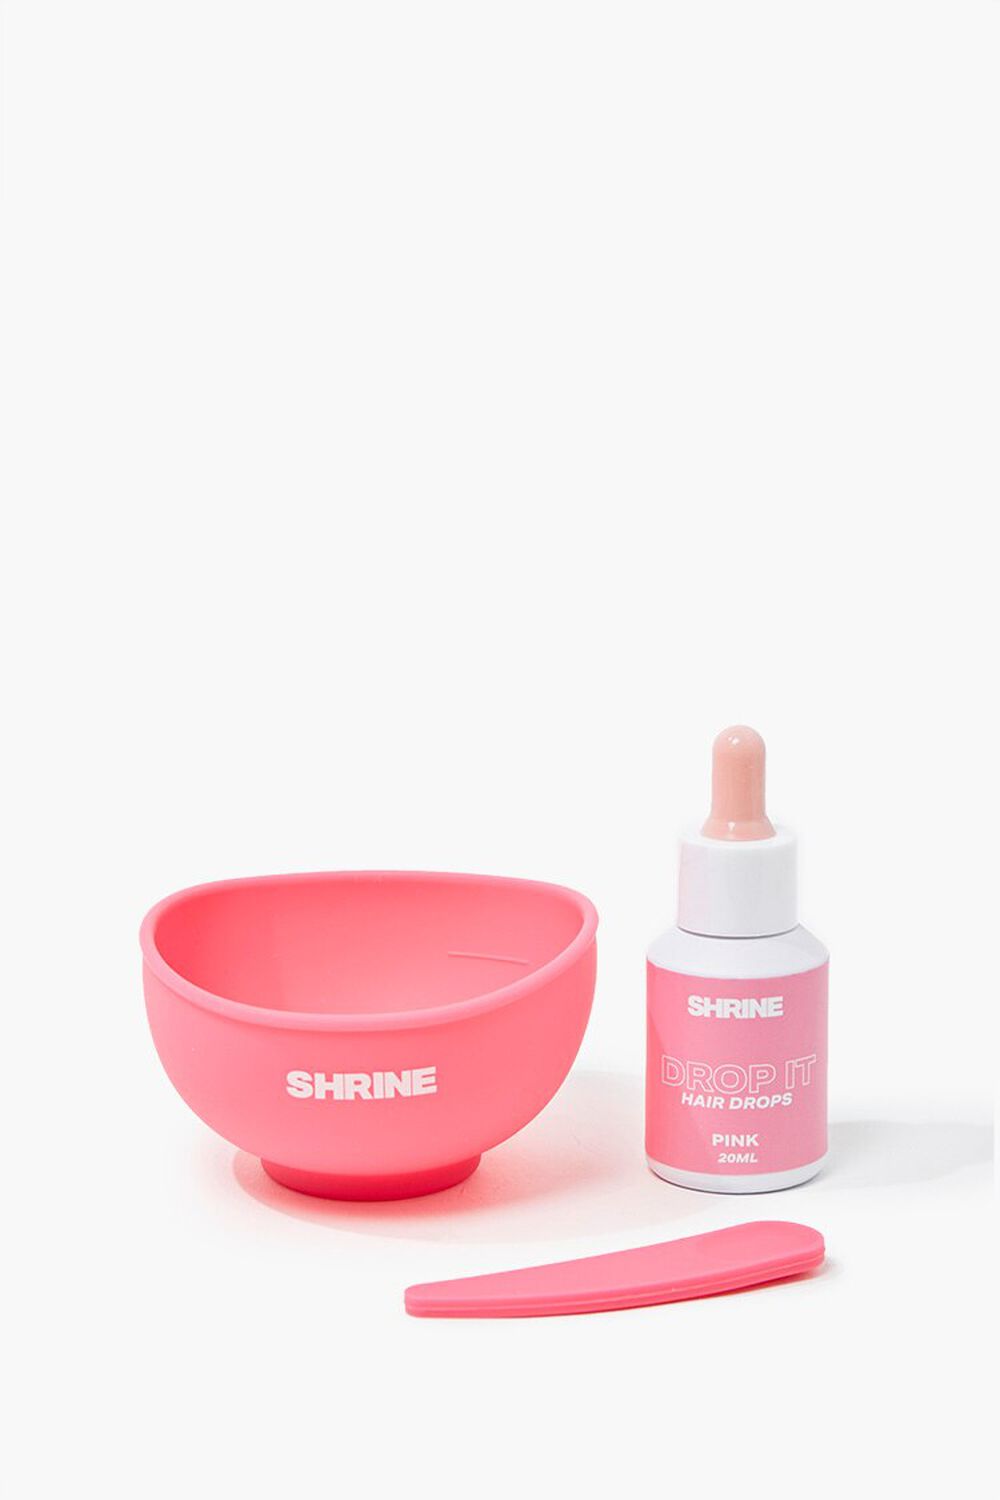 PINK Pink Hair Dye - Drop It Kit, image 1